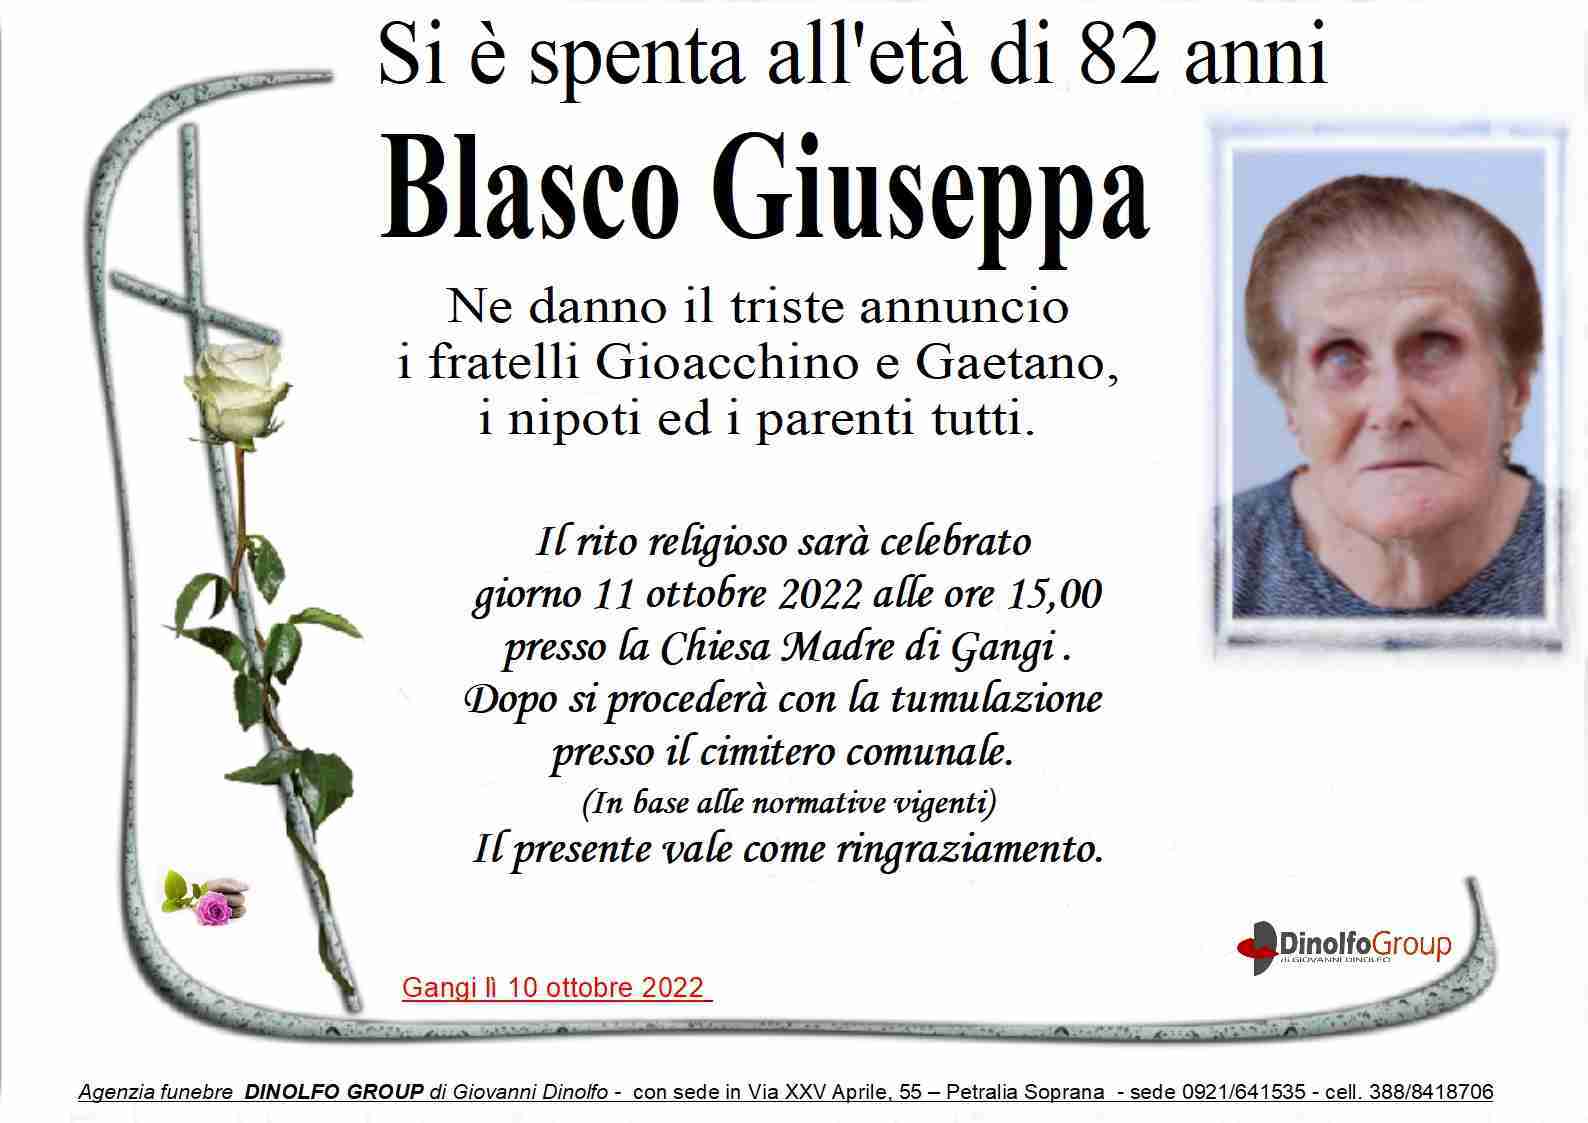 Giuseppa Blasco